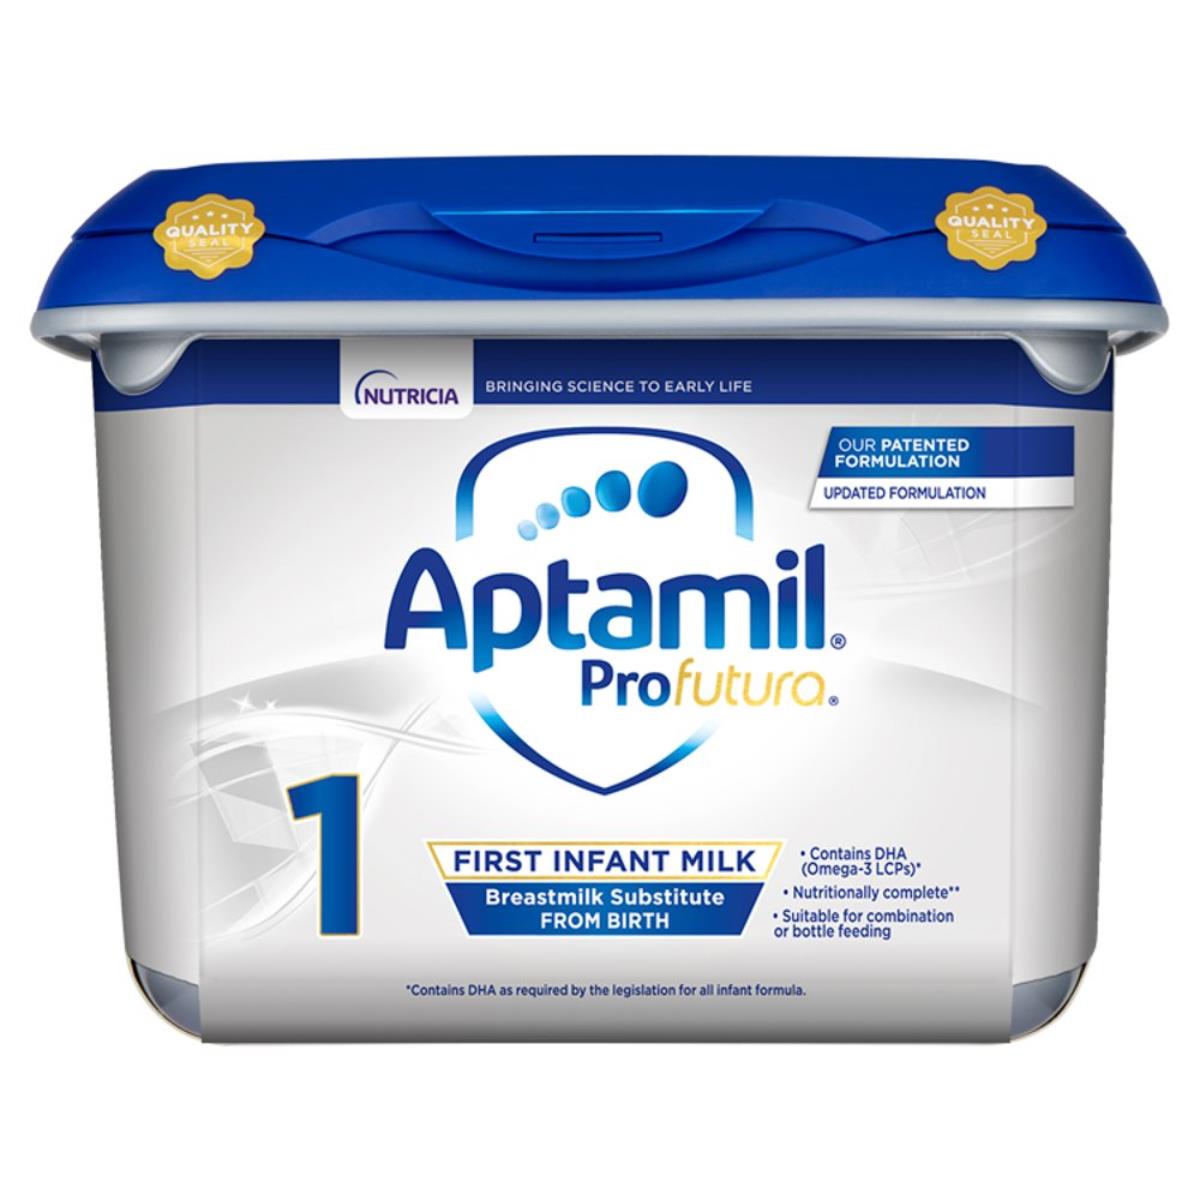 Aptamil 1 Profutura First Infant Milk - 800g